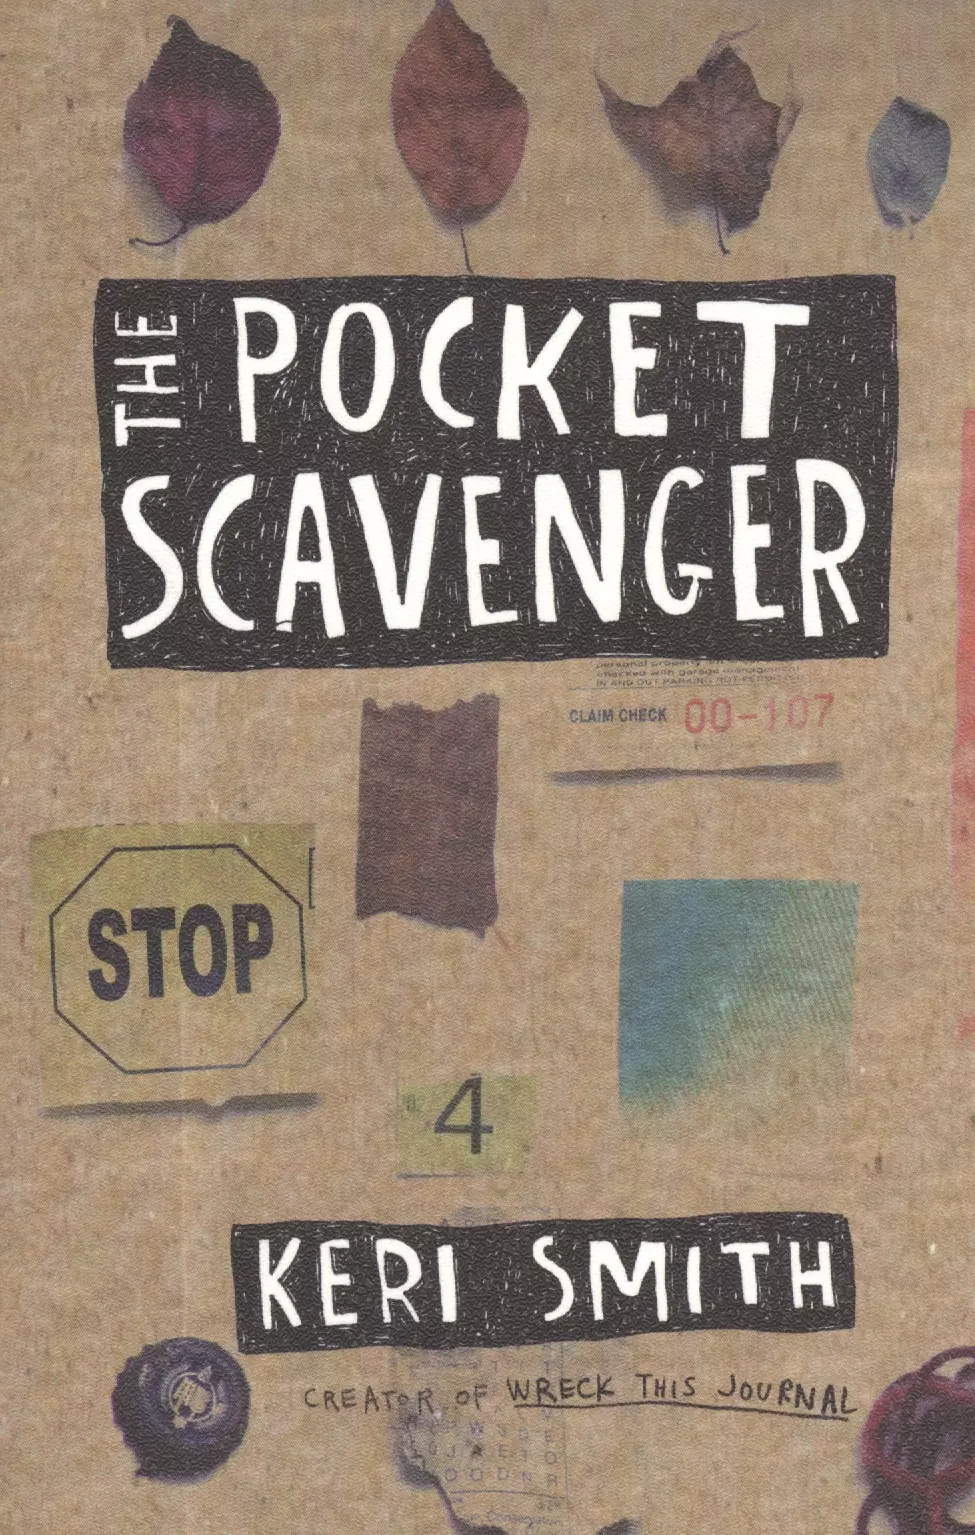 Smith Keri - The Pocket Scavenger